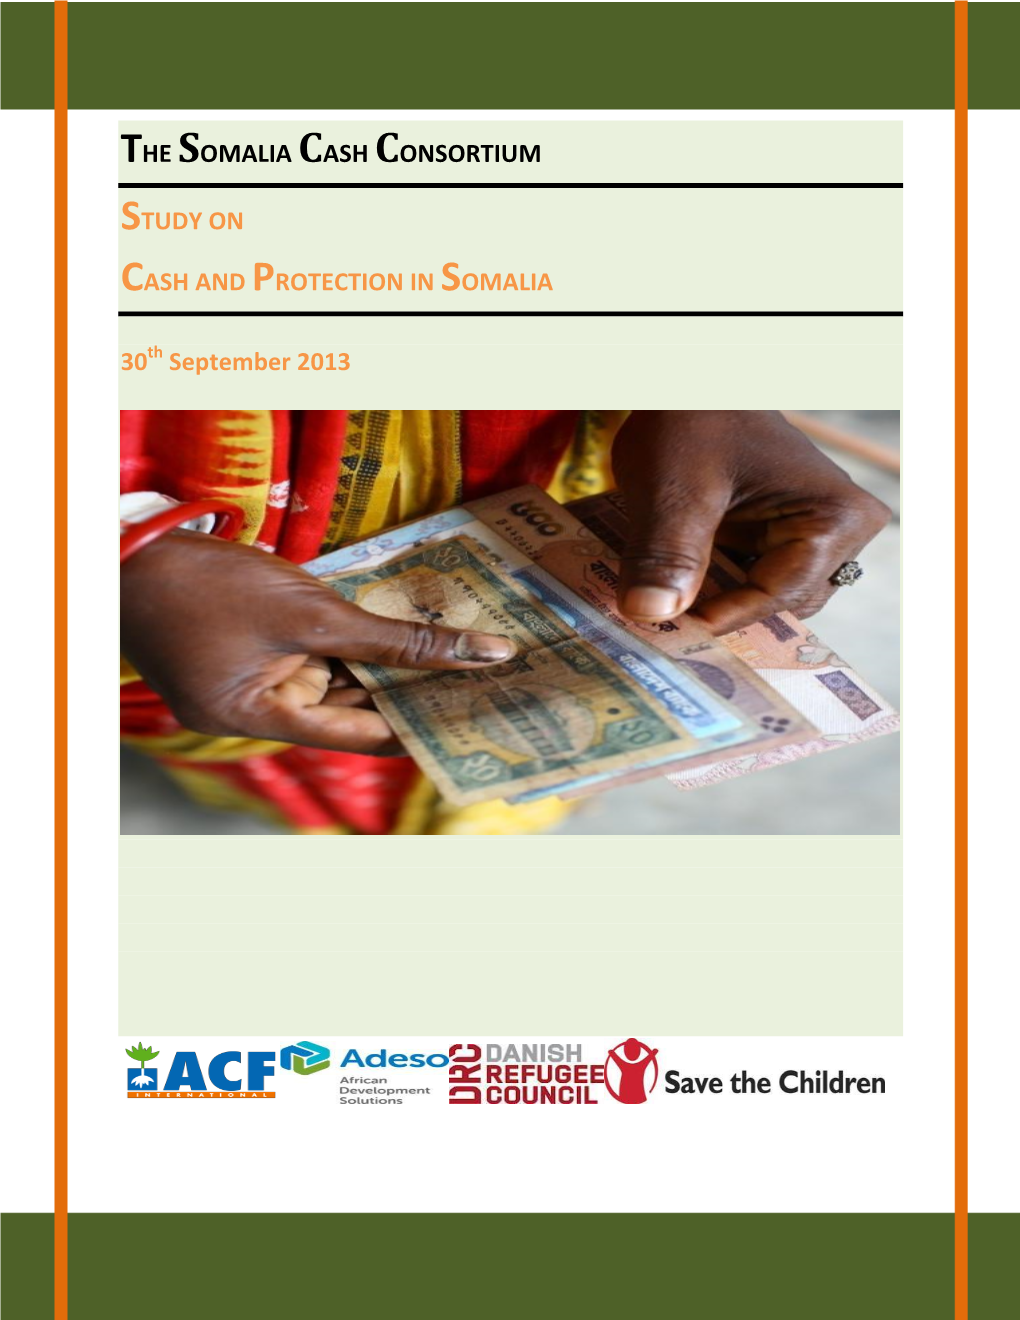 The Somalia Cash Consortium Study on Cash And